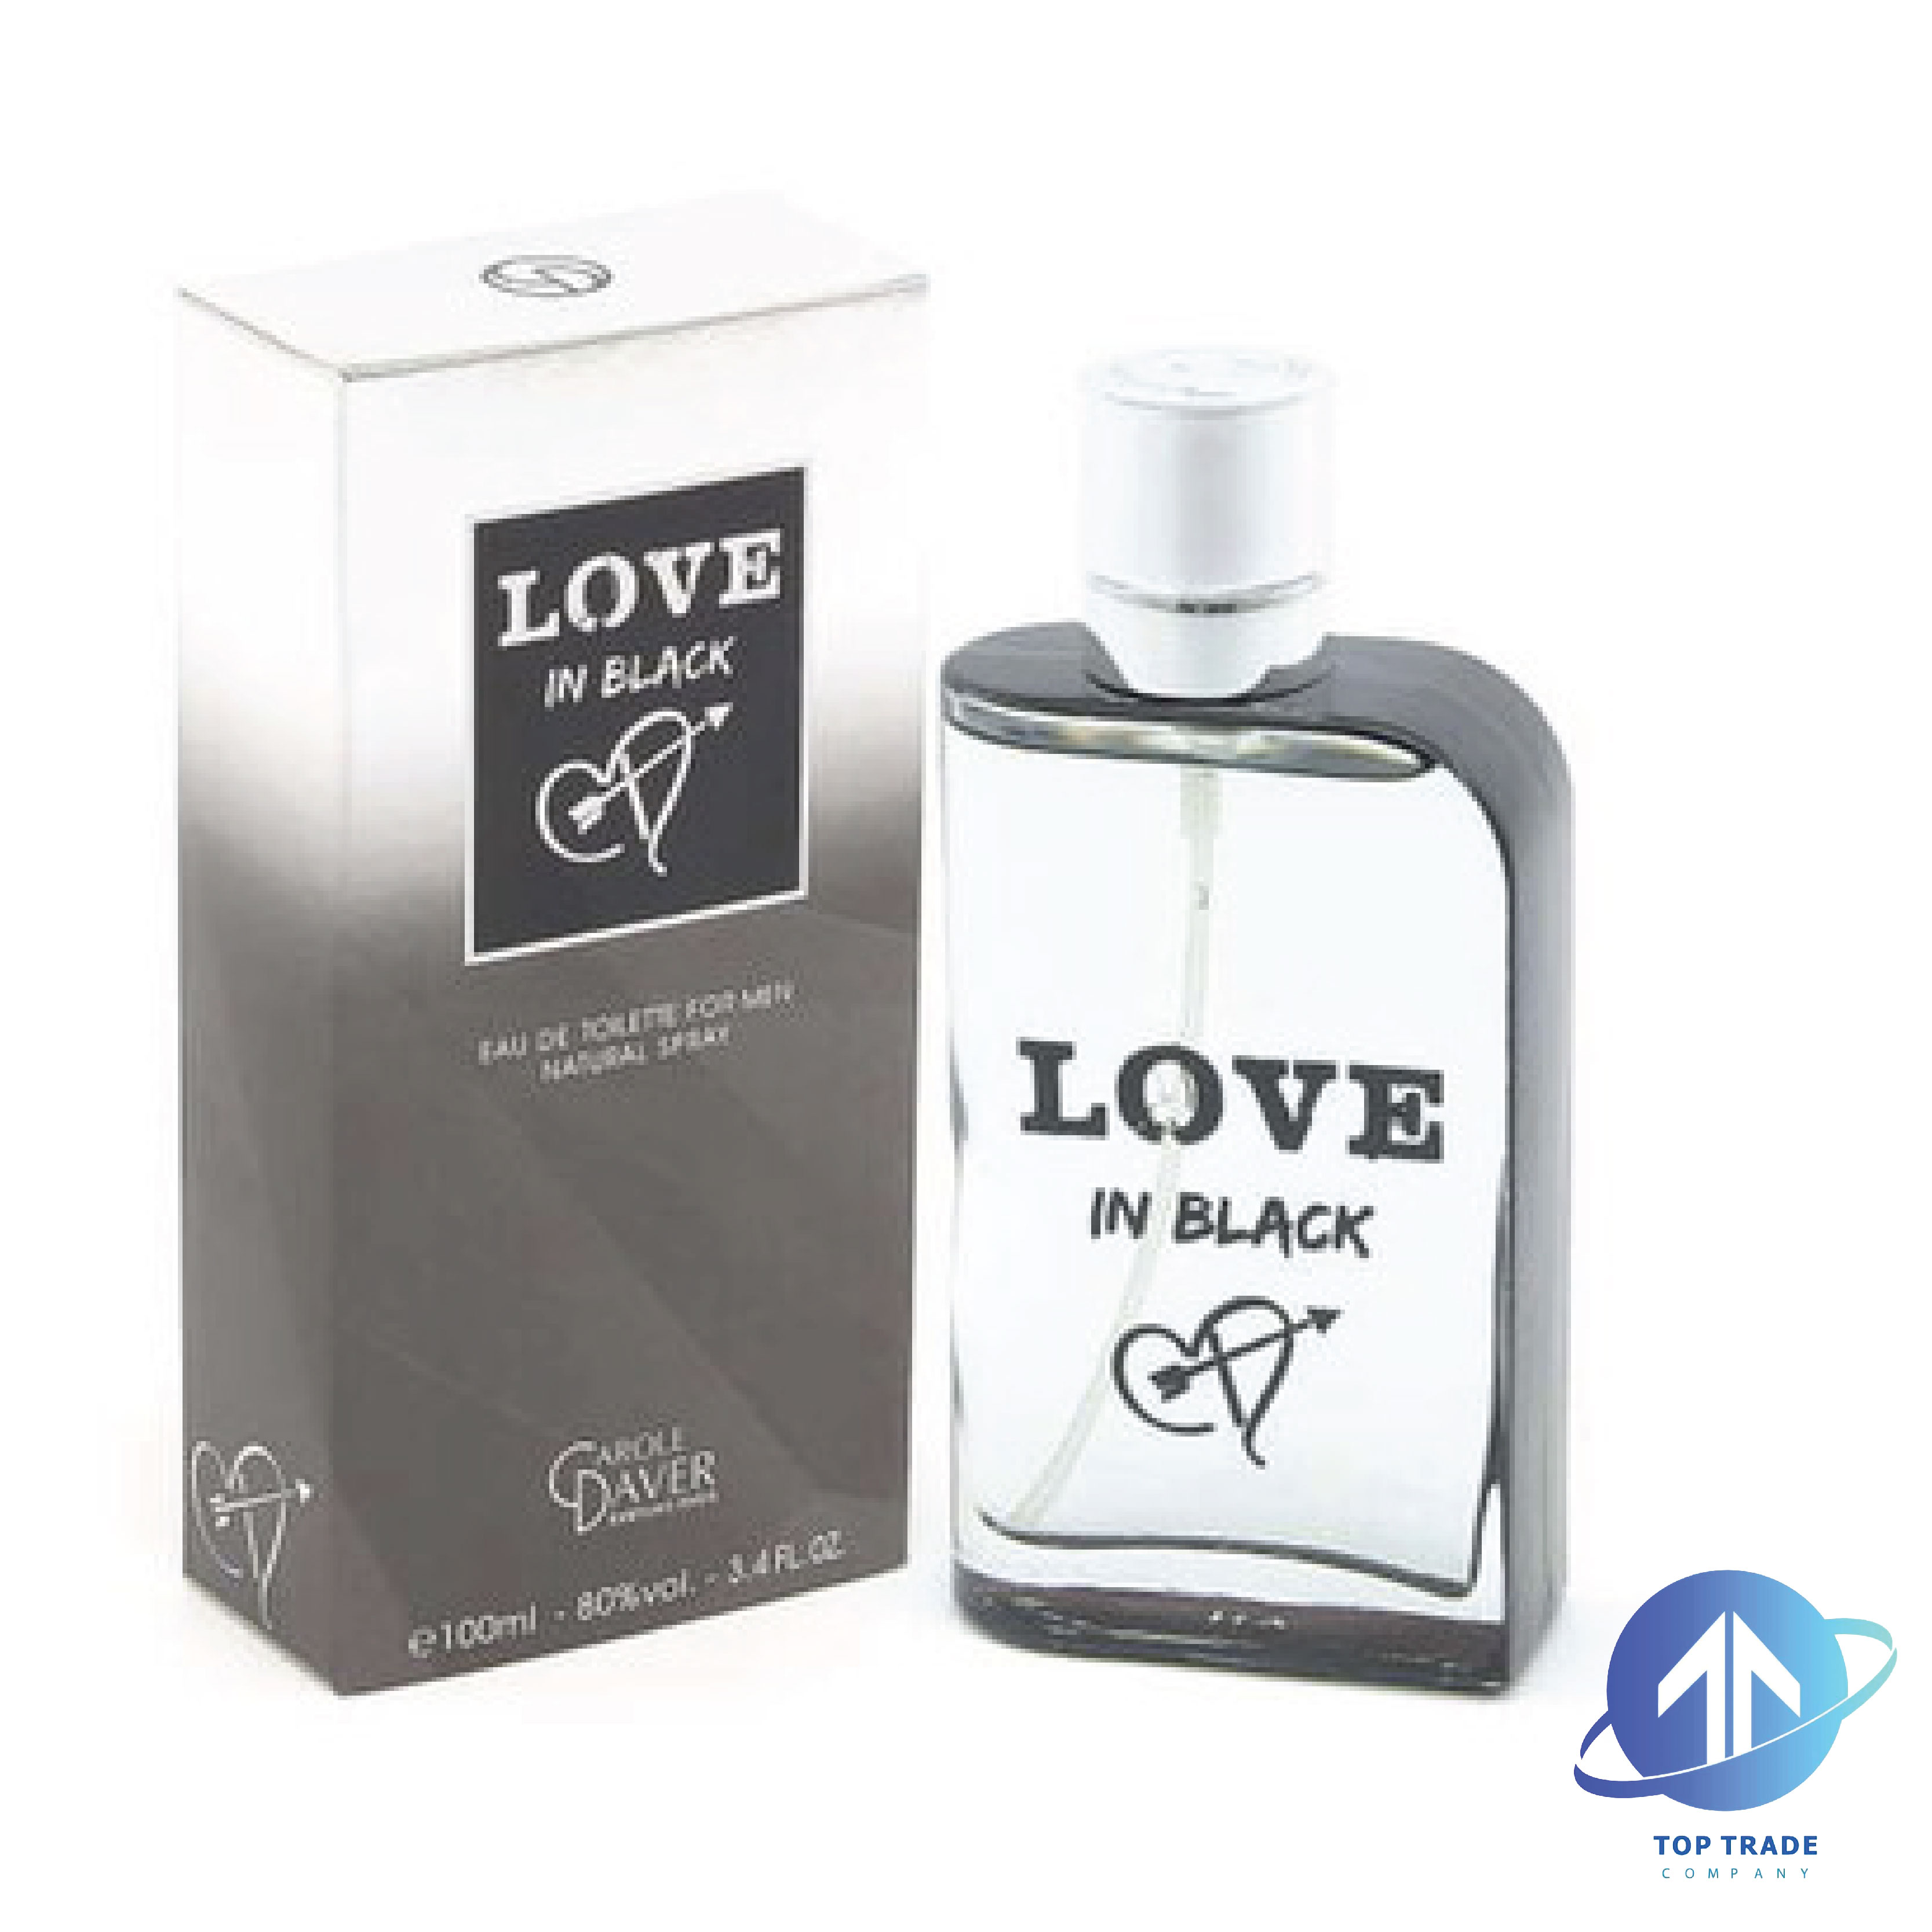 Carole Daver Parfums Paris Men - Love in Black Edition - Collection Love 100ml